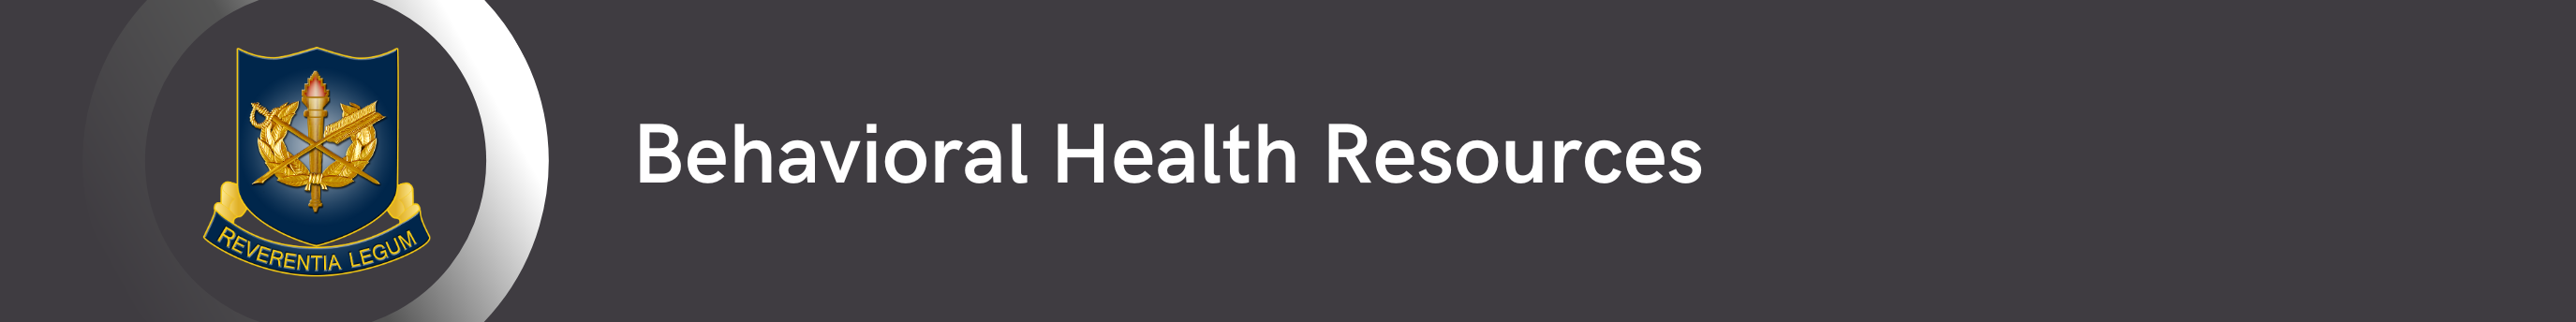 Behavioral Health Resources Banner